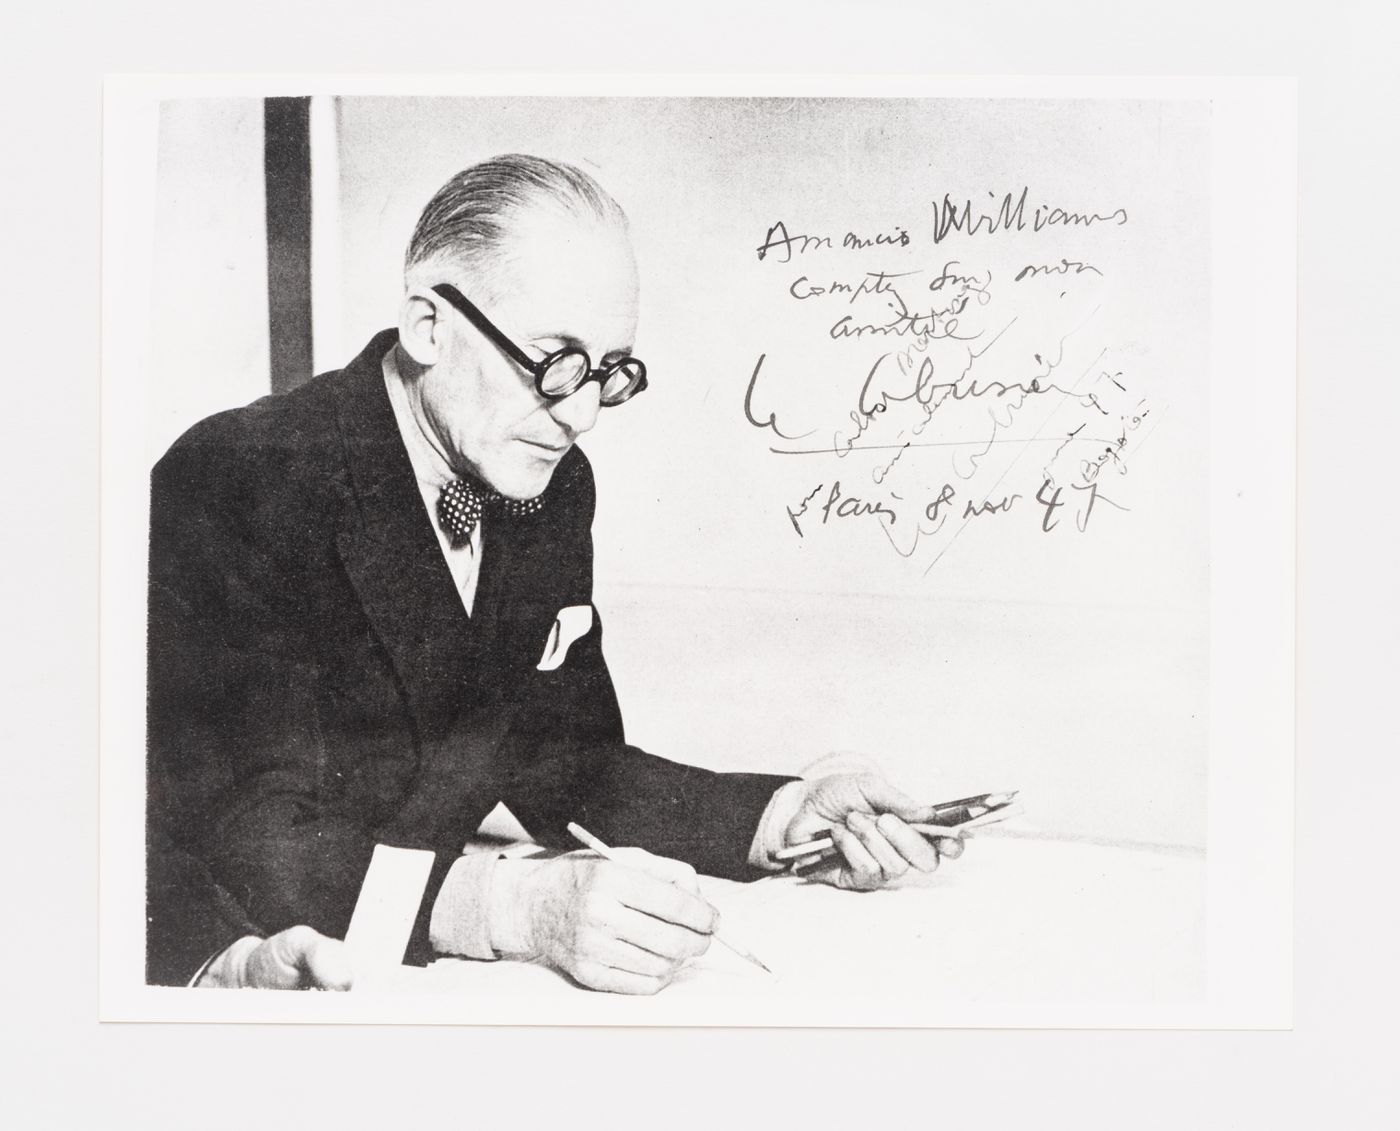 Signed photograph of Le Corbusier to Amancio Williams